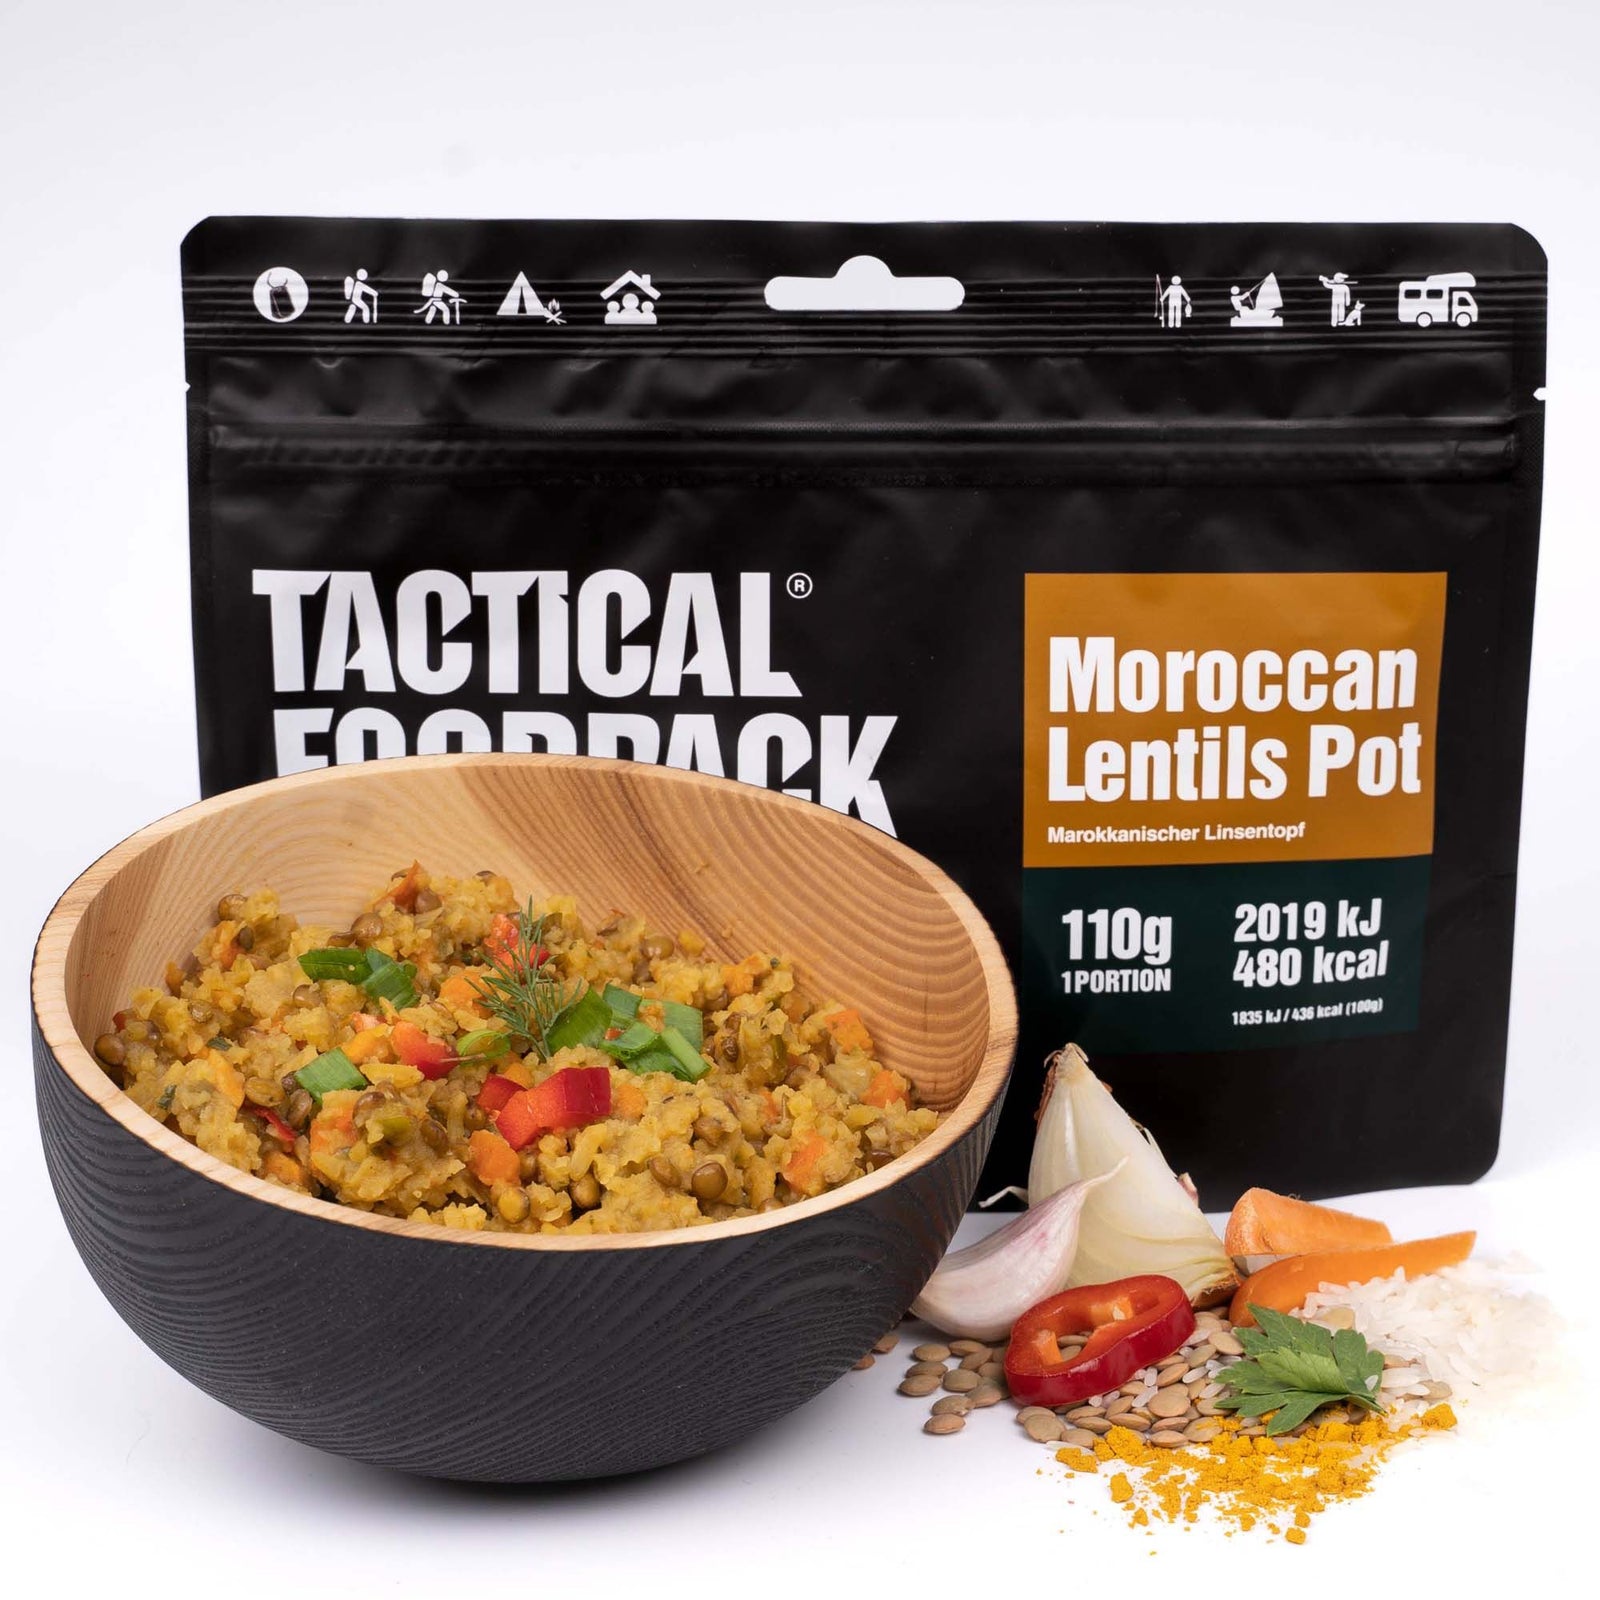 Tactical Foodpack | Moroccan Lentils Pot 110g - Stufato di lenticchie